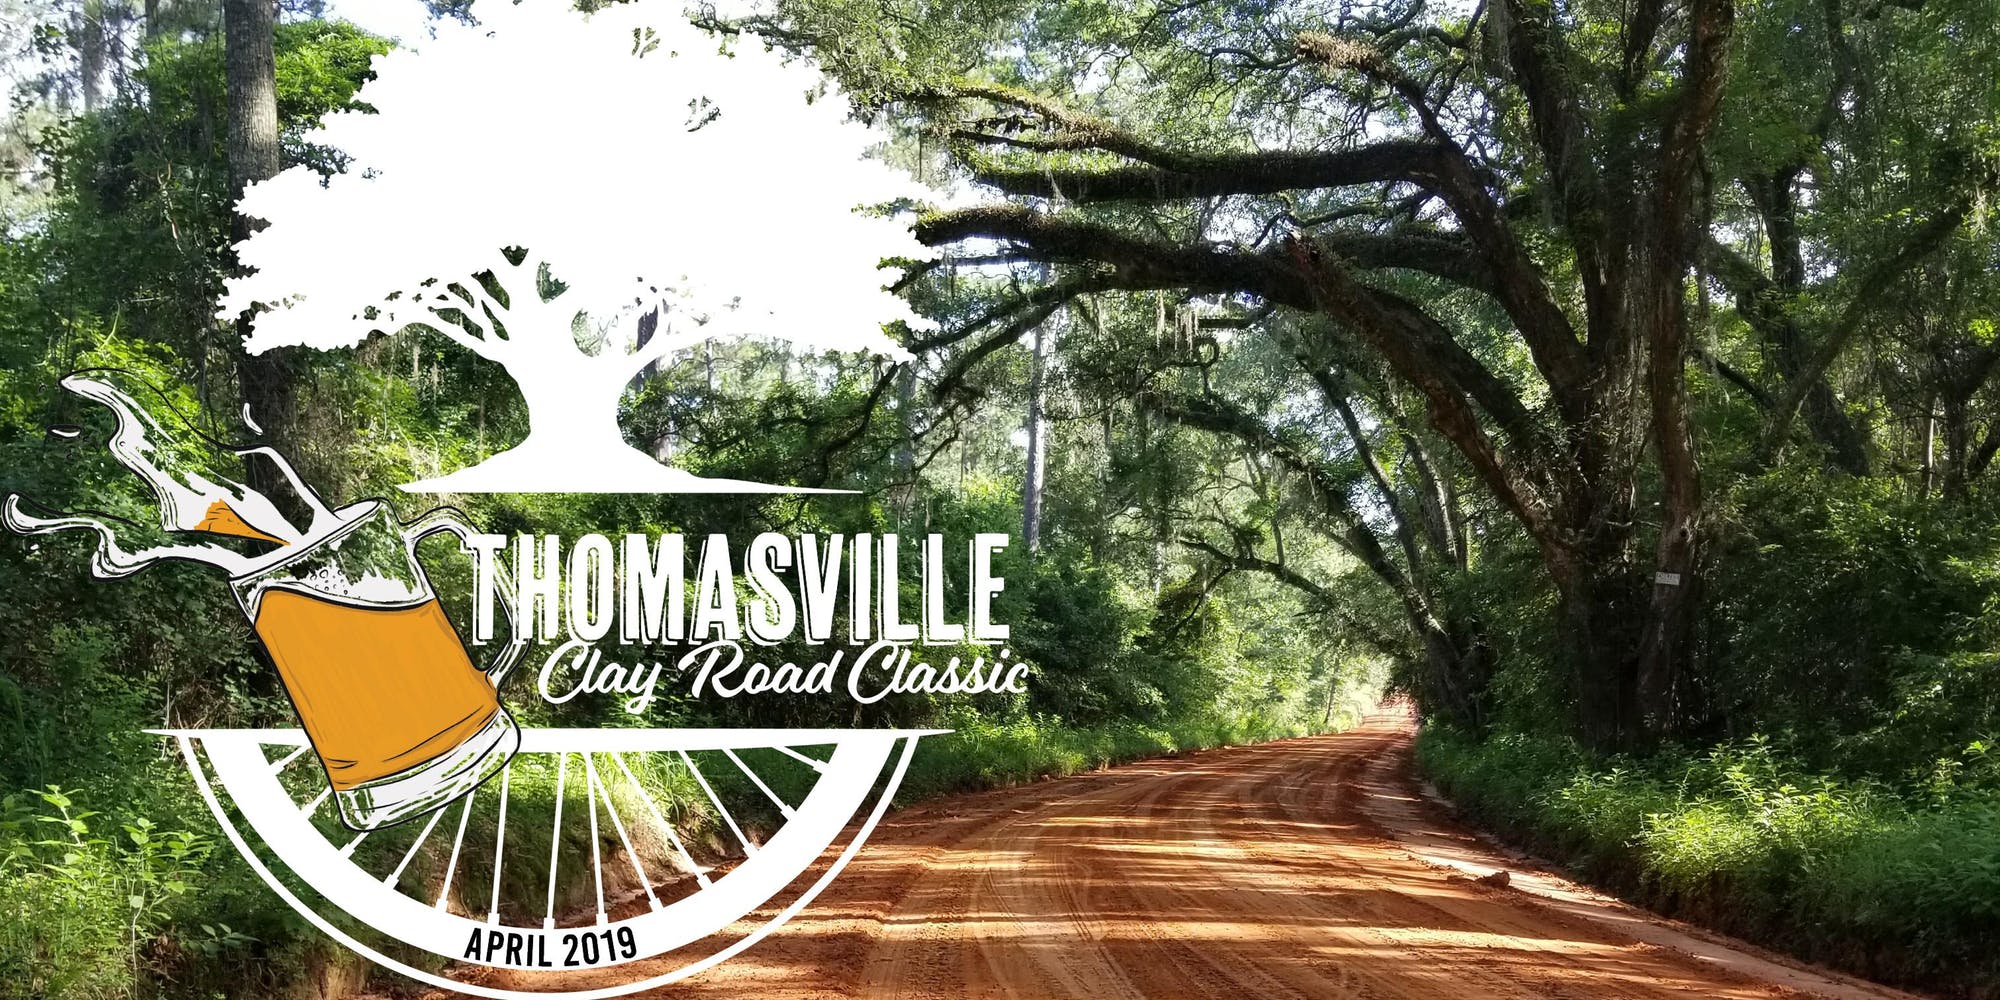 Thomasville Clay Road Classic Visit Thomasville,